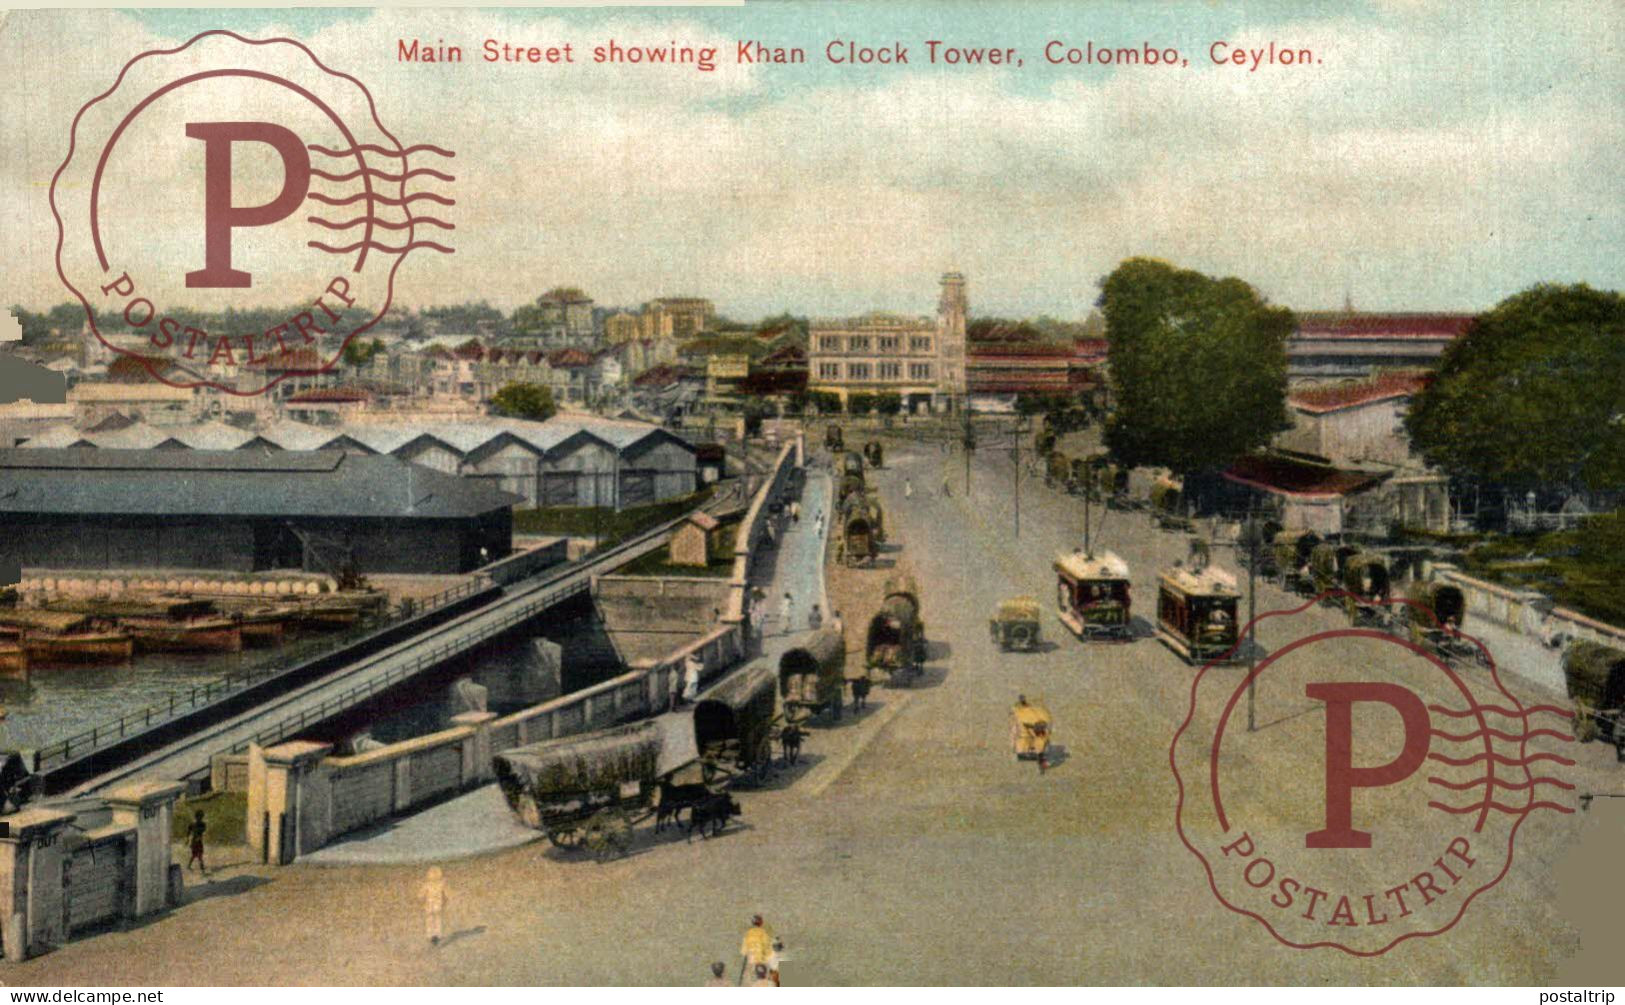 SRI LANKA CEYLON - CEYLAN. MAIN STREET SHOWING KHAN CLOCK TOWER. COLOMBO - Sri Lanka (Ceylon)